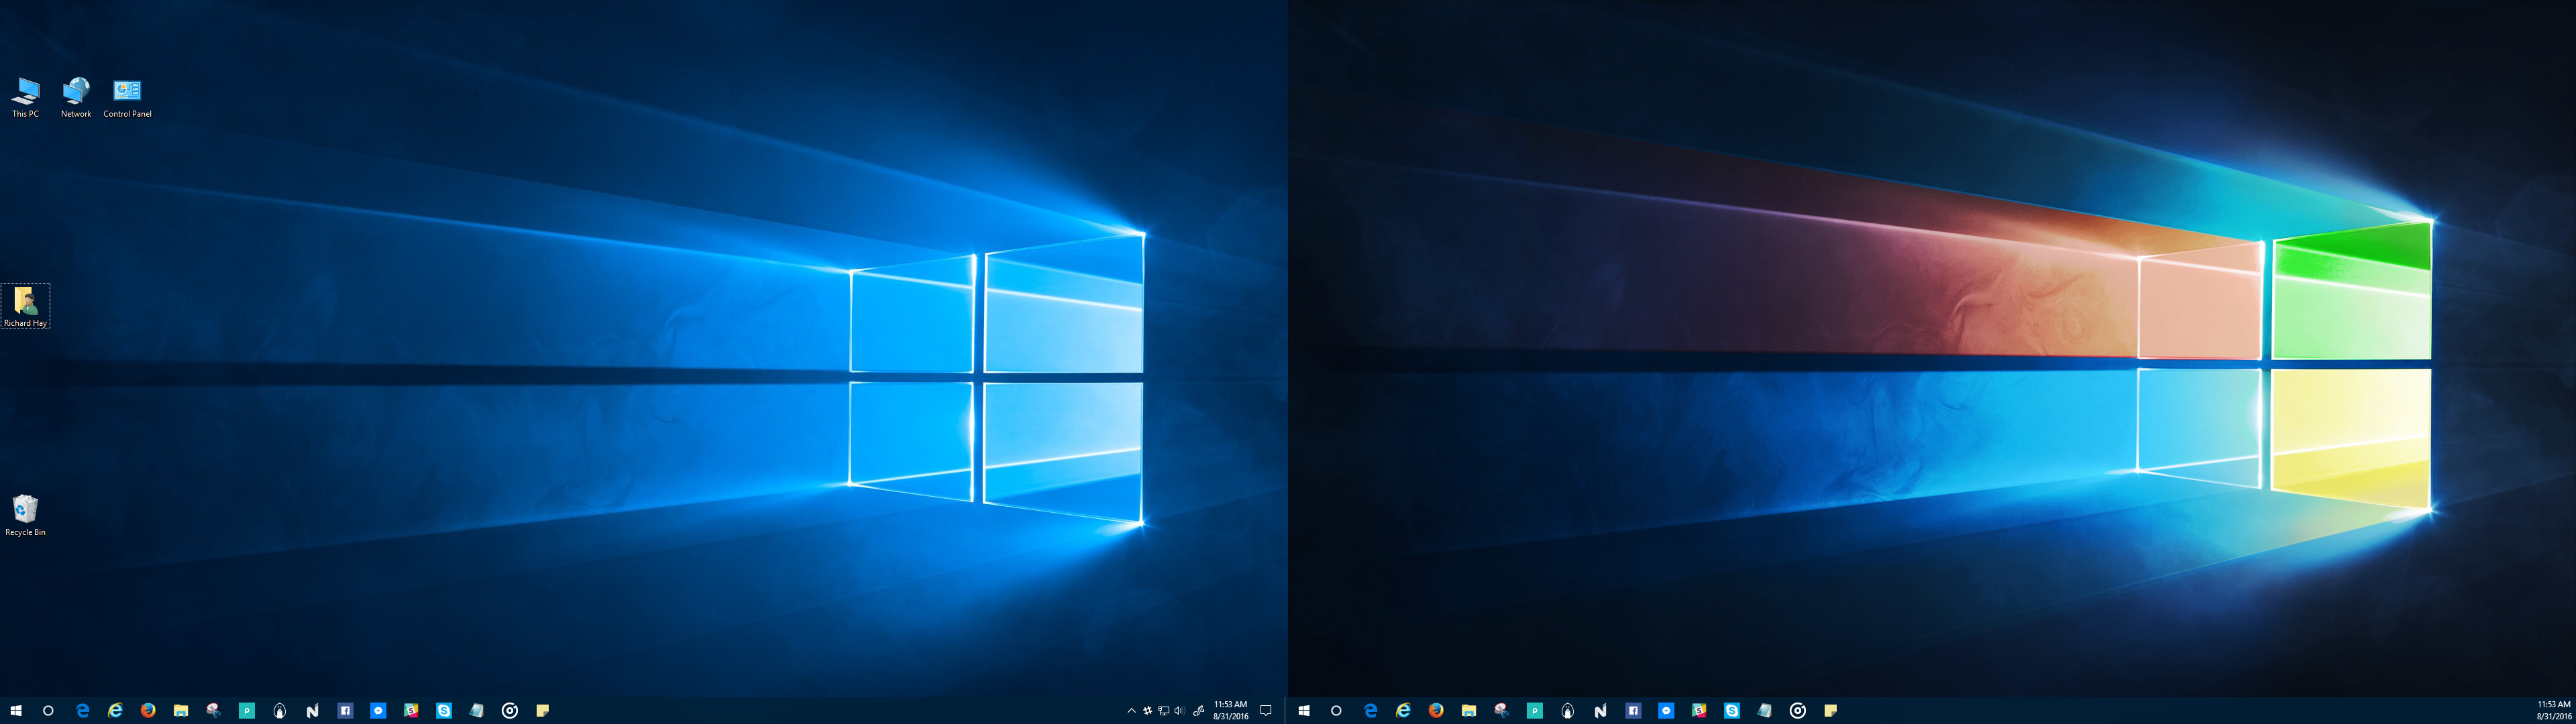 dual monitor wallpaper windows 7 3840x1080,blue,light,lighting,sky,architecture